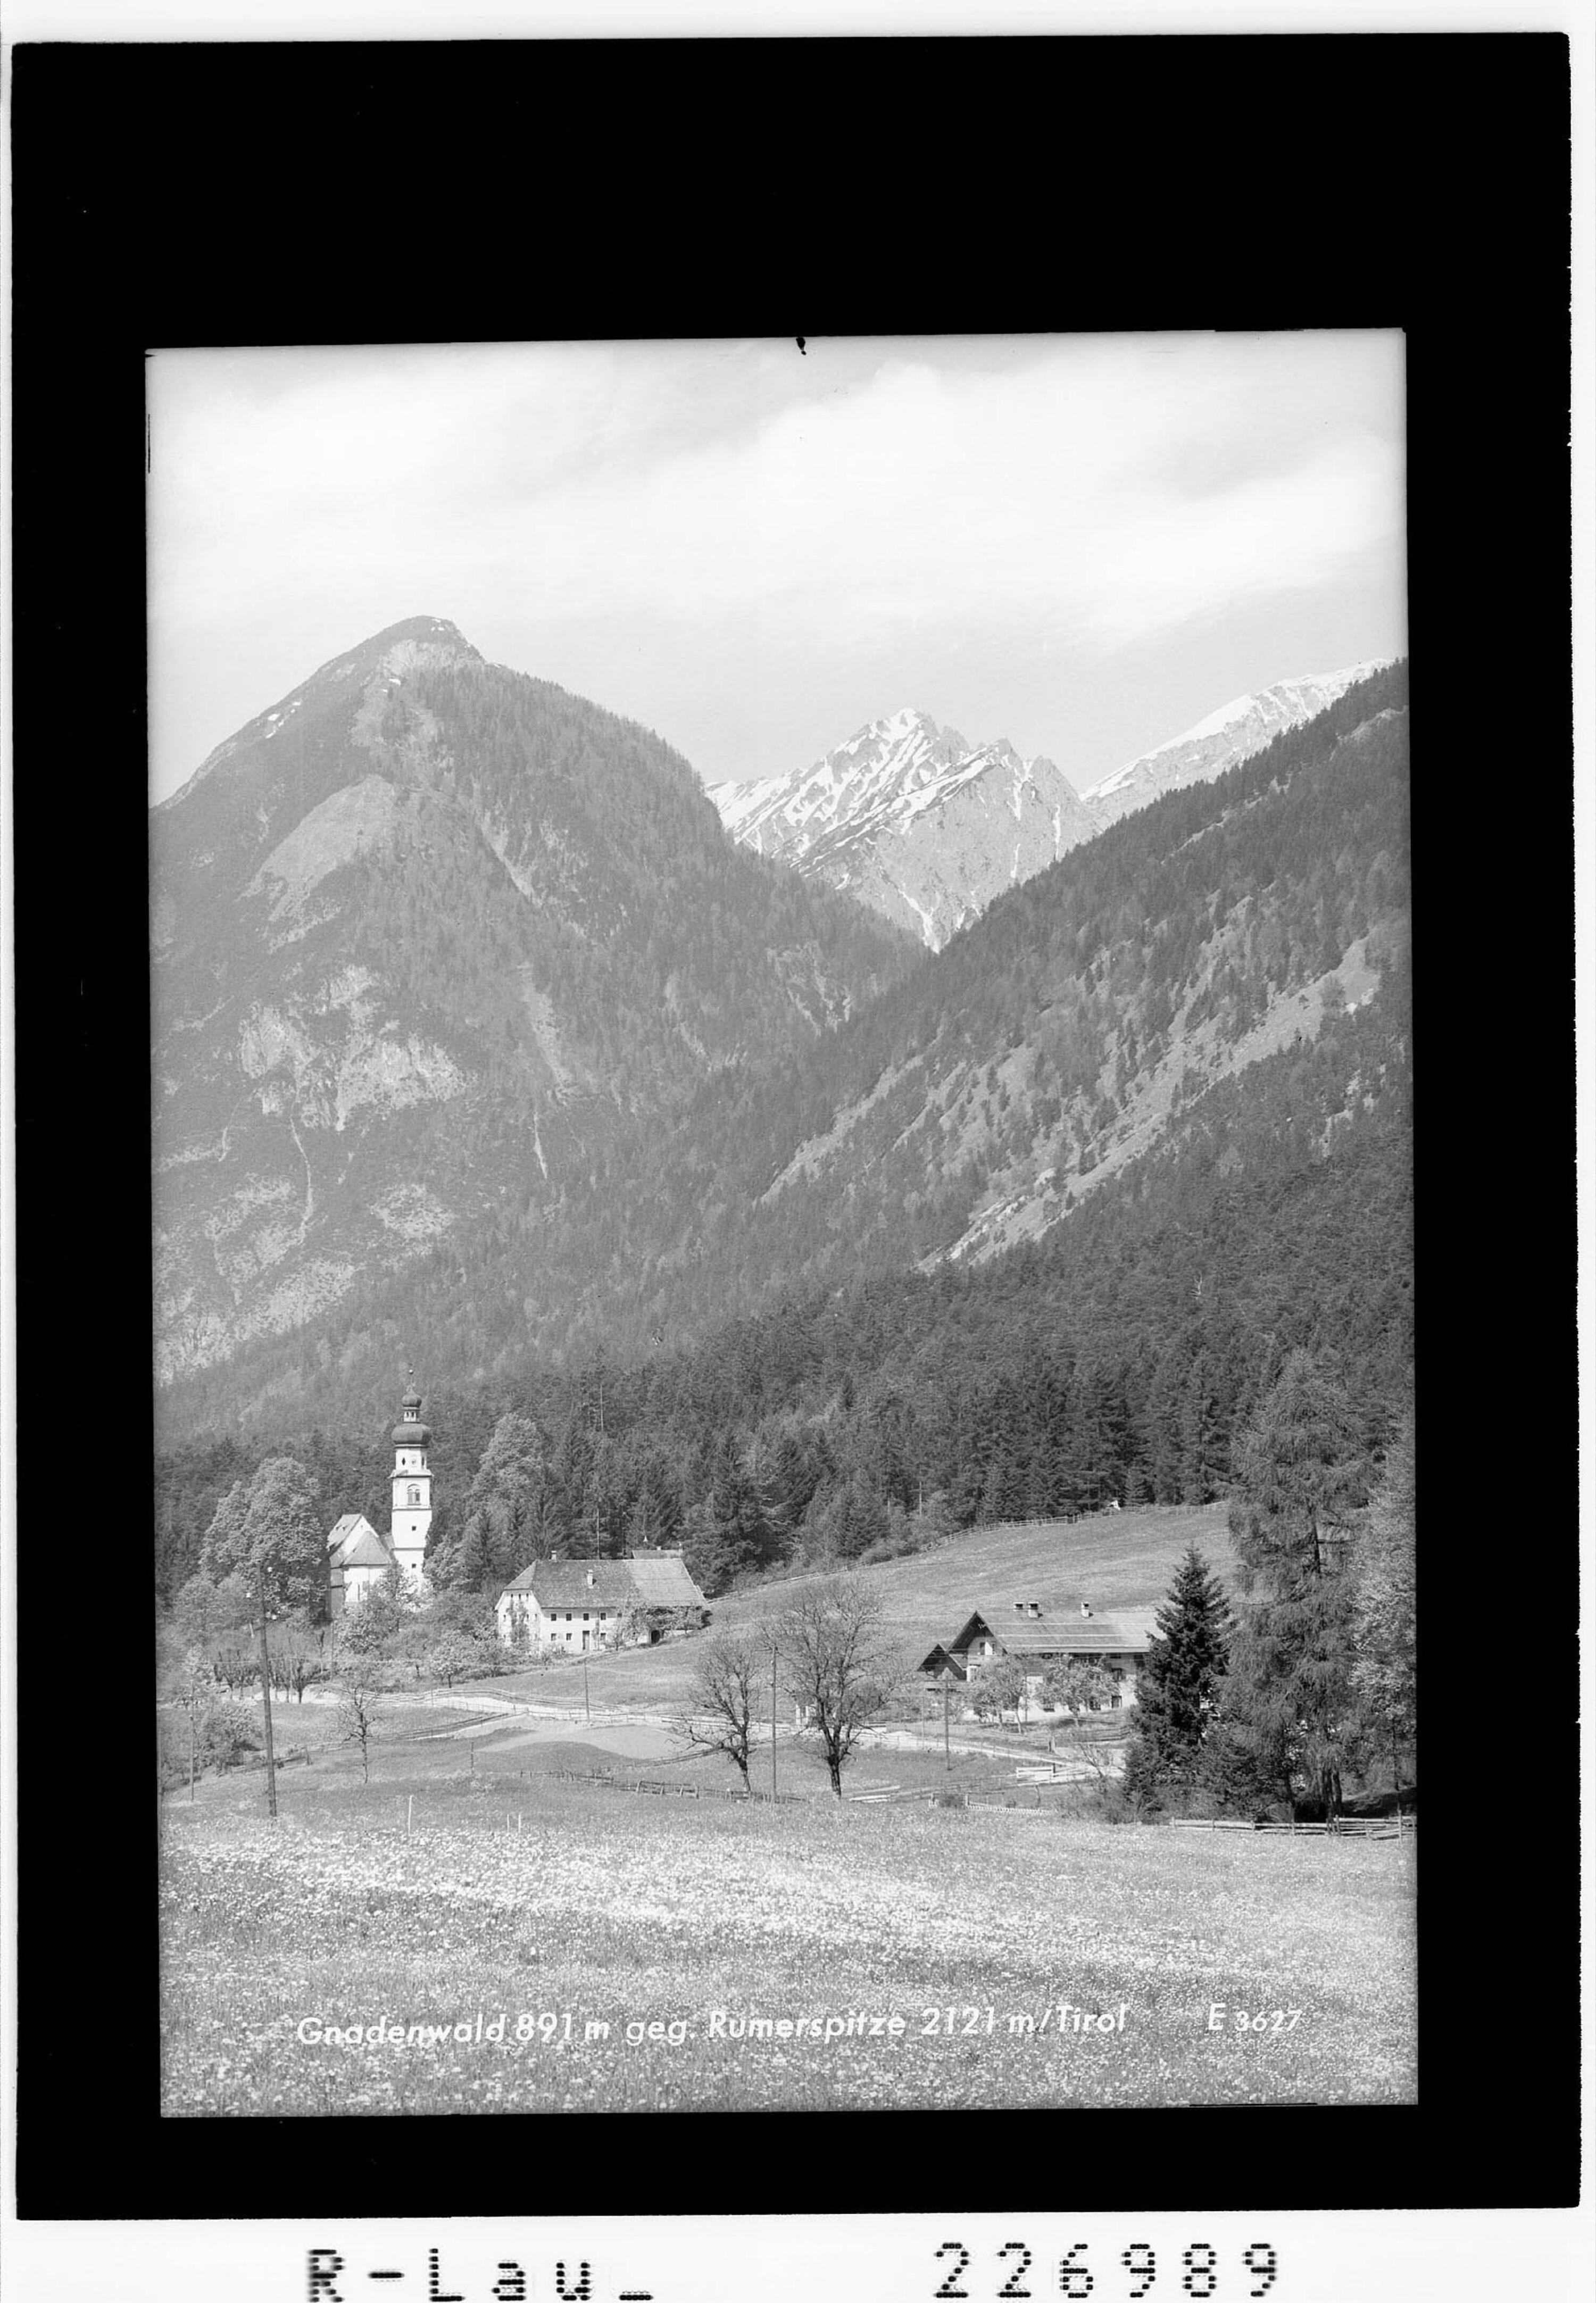 Gnadenwald 891 m gegen Rumer Spitze 2121 m / Tirol></div>


    <hr>
    <div class=